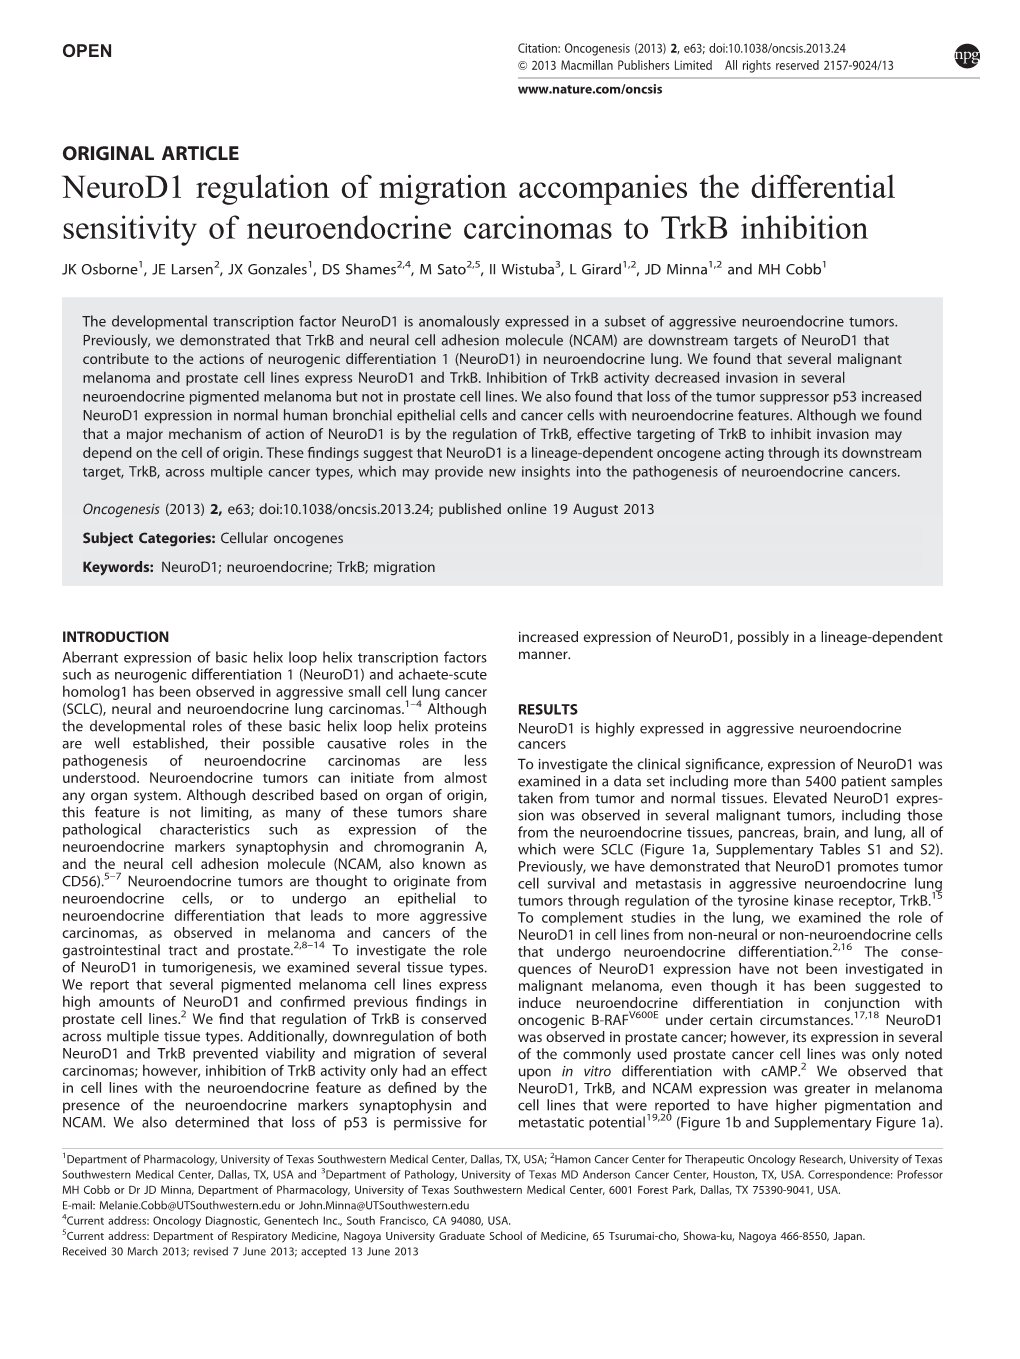 Neurod1 Regulation of Migration Accompanies the Differential Sensitivity of Neuroendocrine Carcinomas to Trkb Inhibition